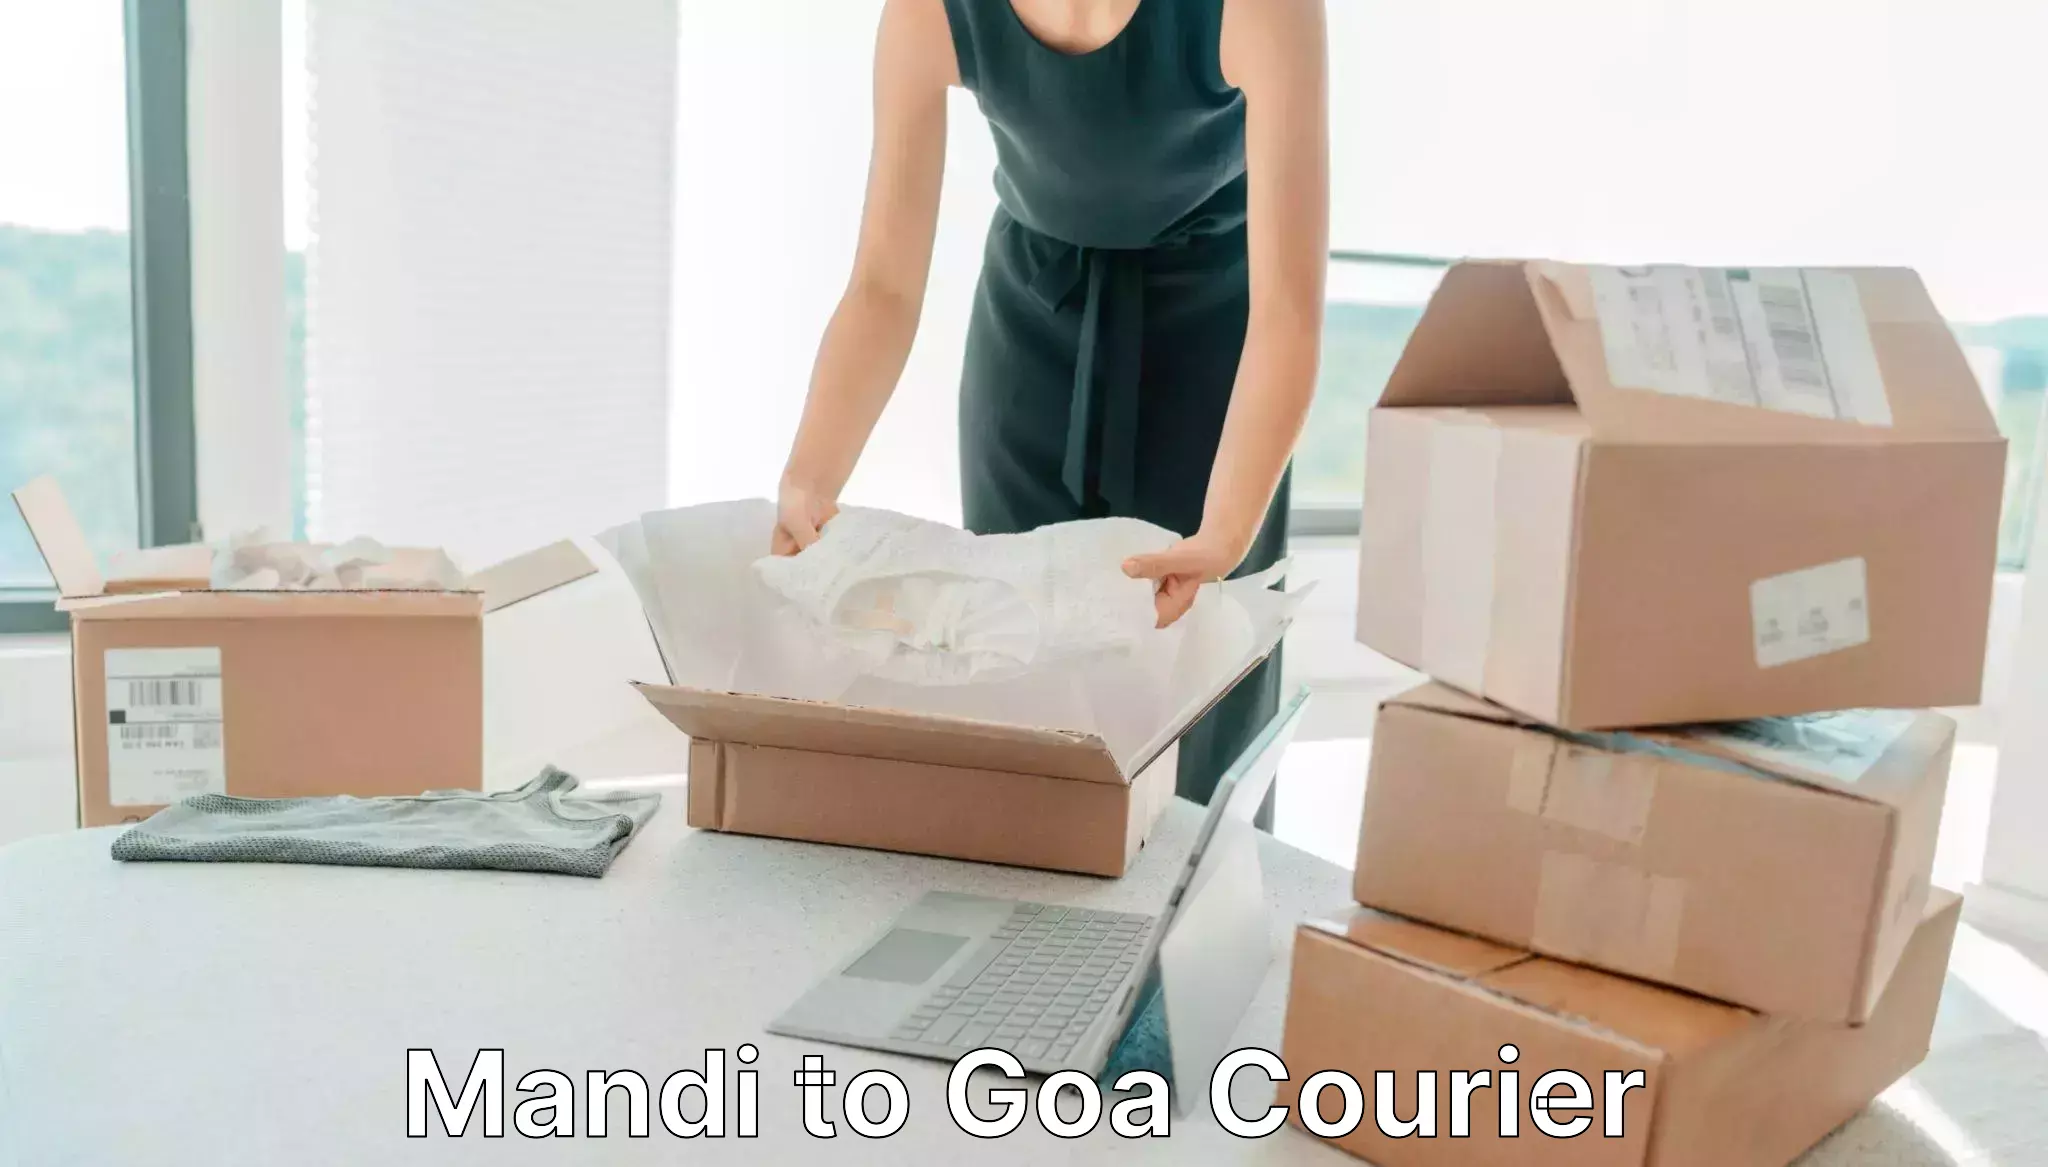 Courier service partnerships Mandi to Goa University